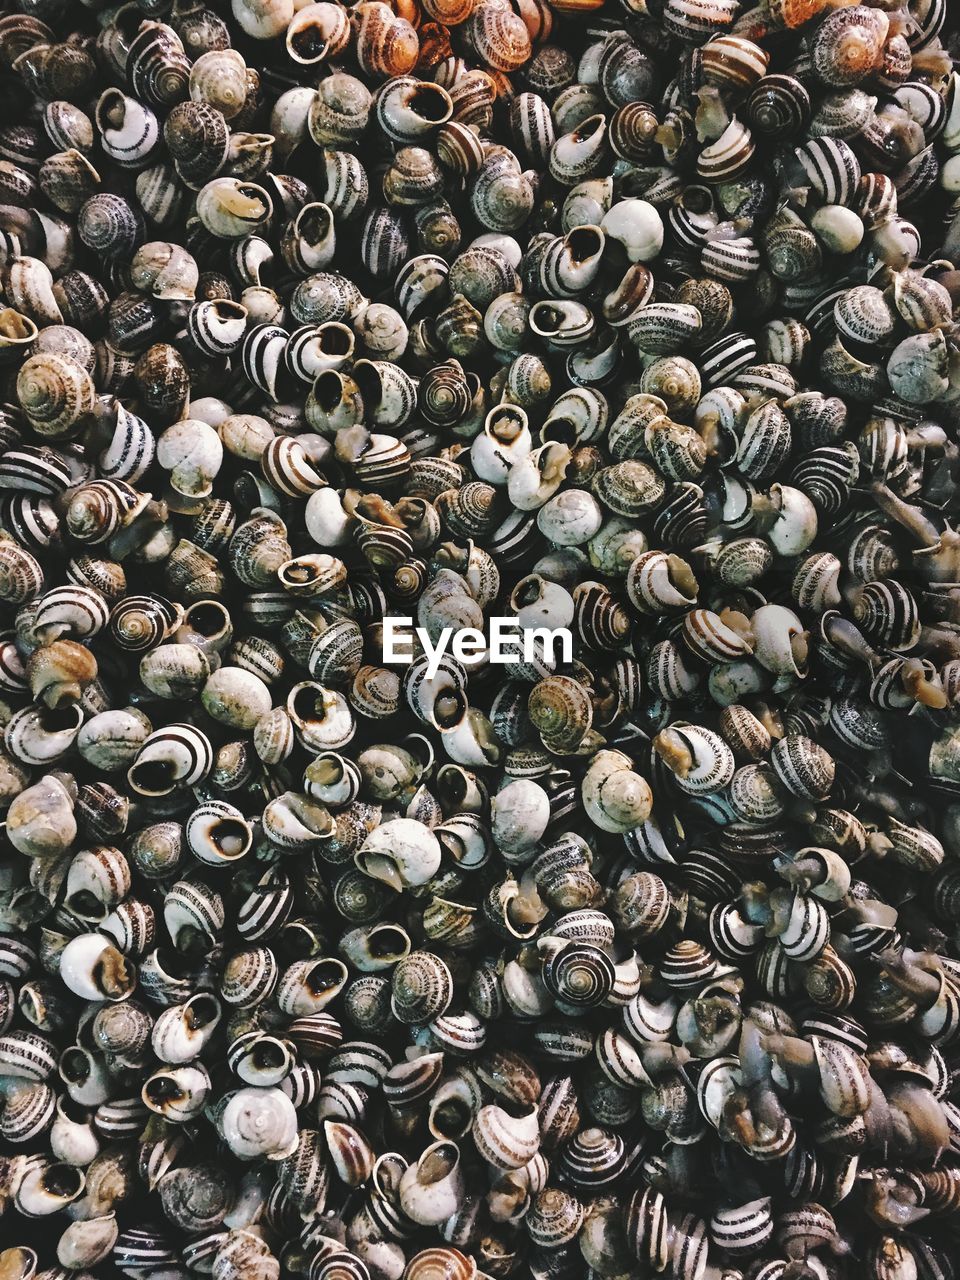 Pile of snails